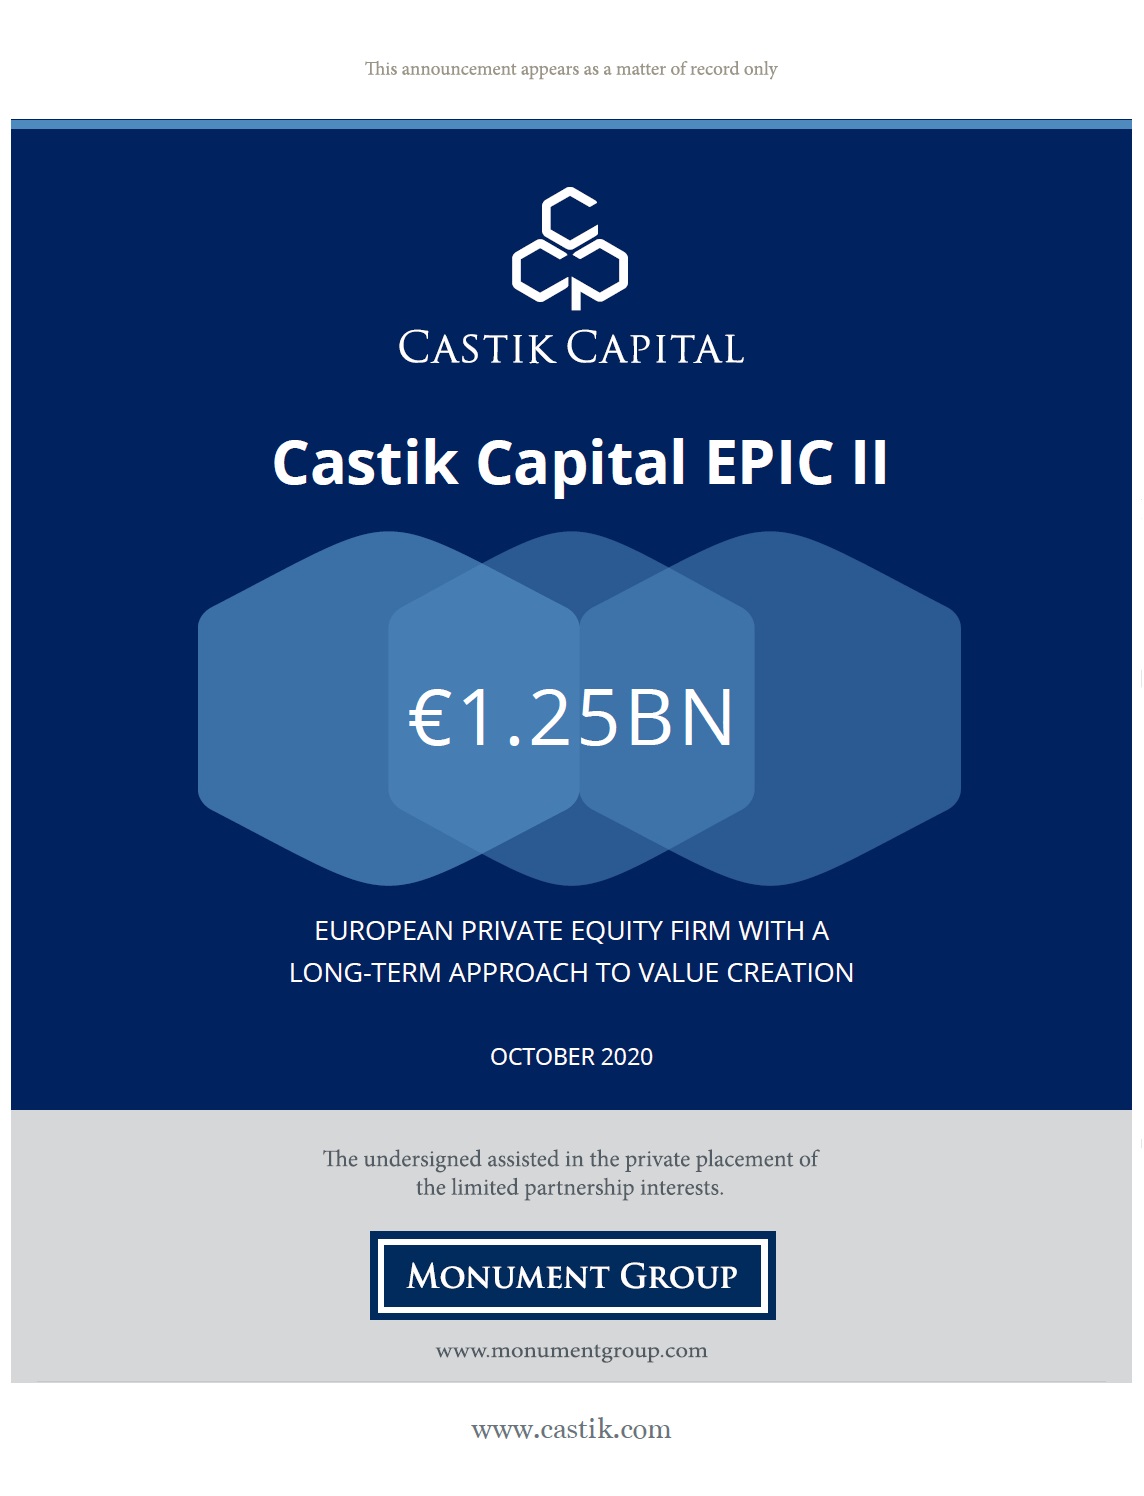 Castik Capital EPIC II